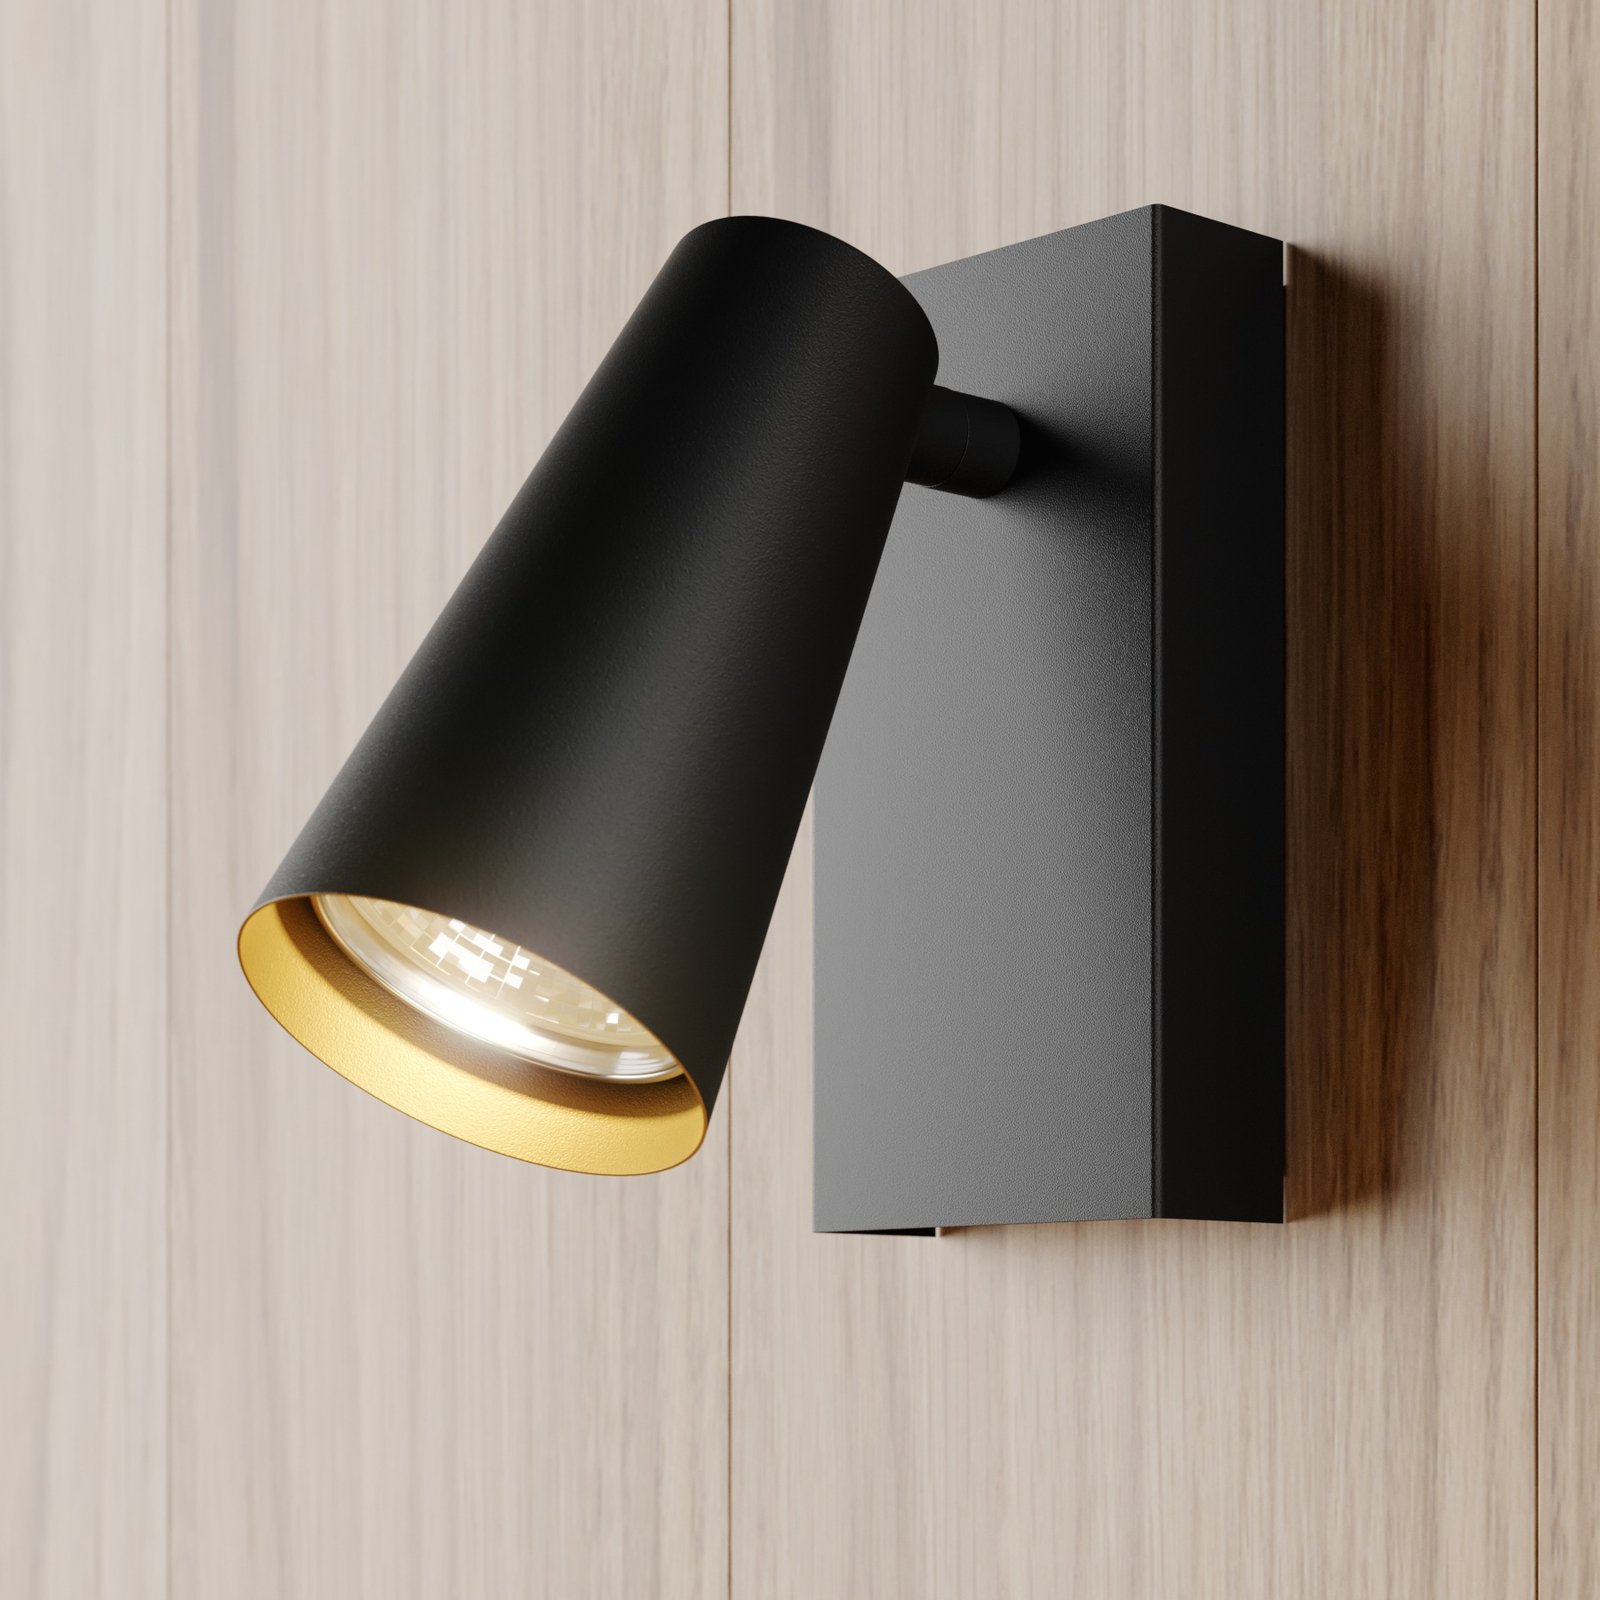 Lucande Angelina spotlight, svart-guld, 1 lampa